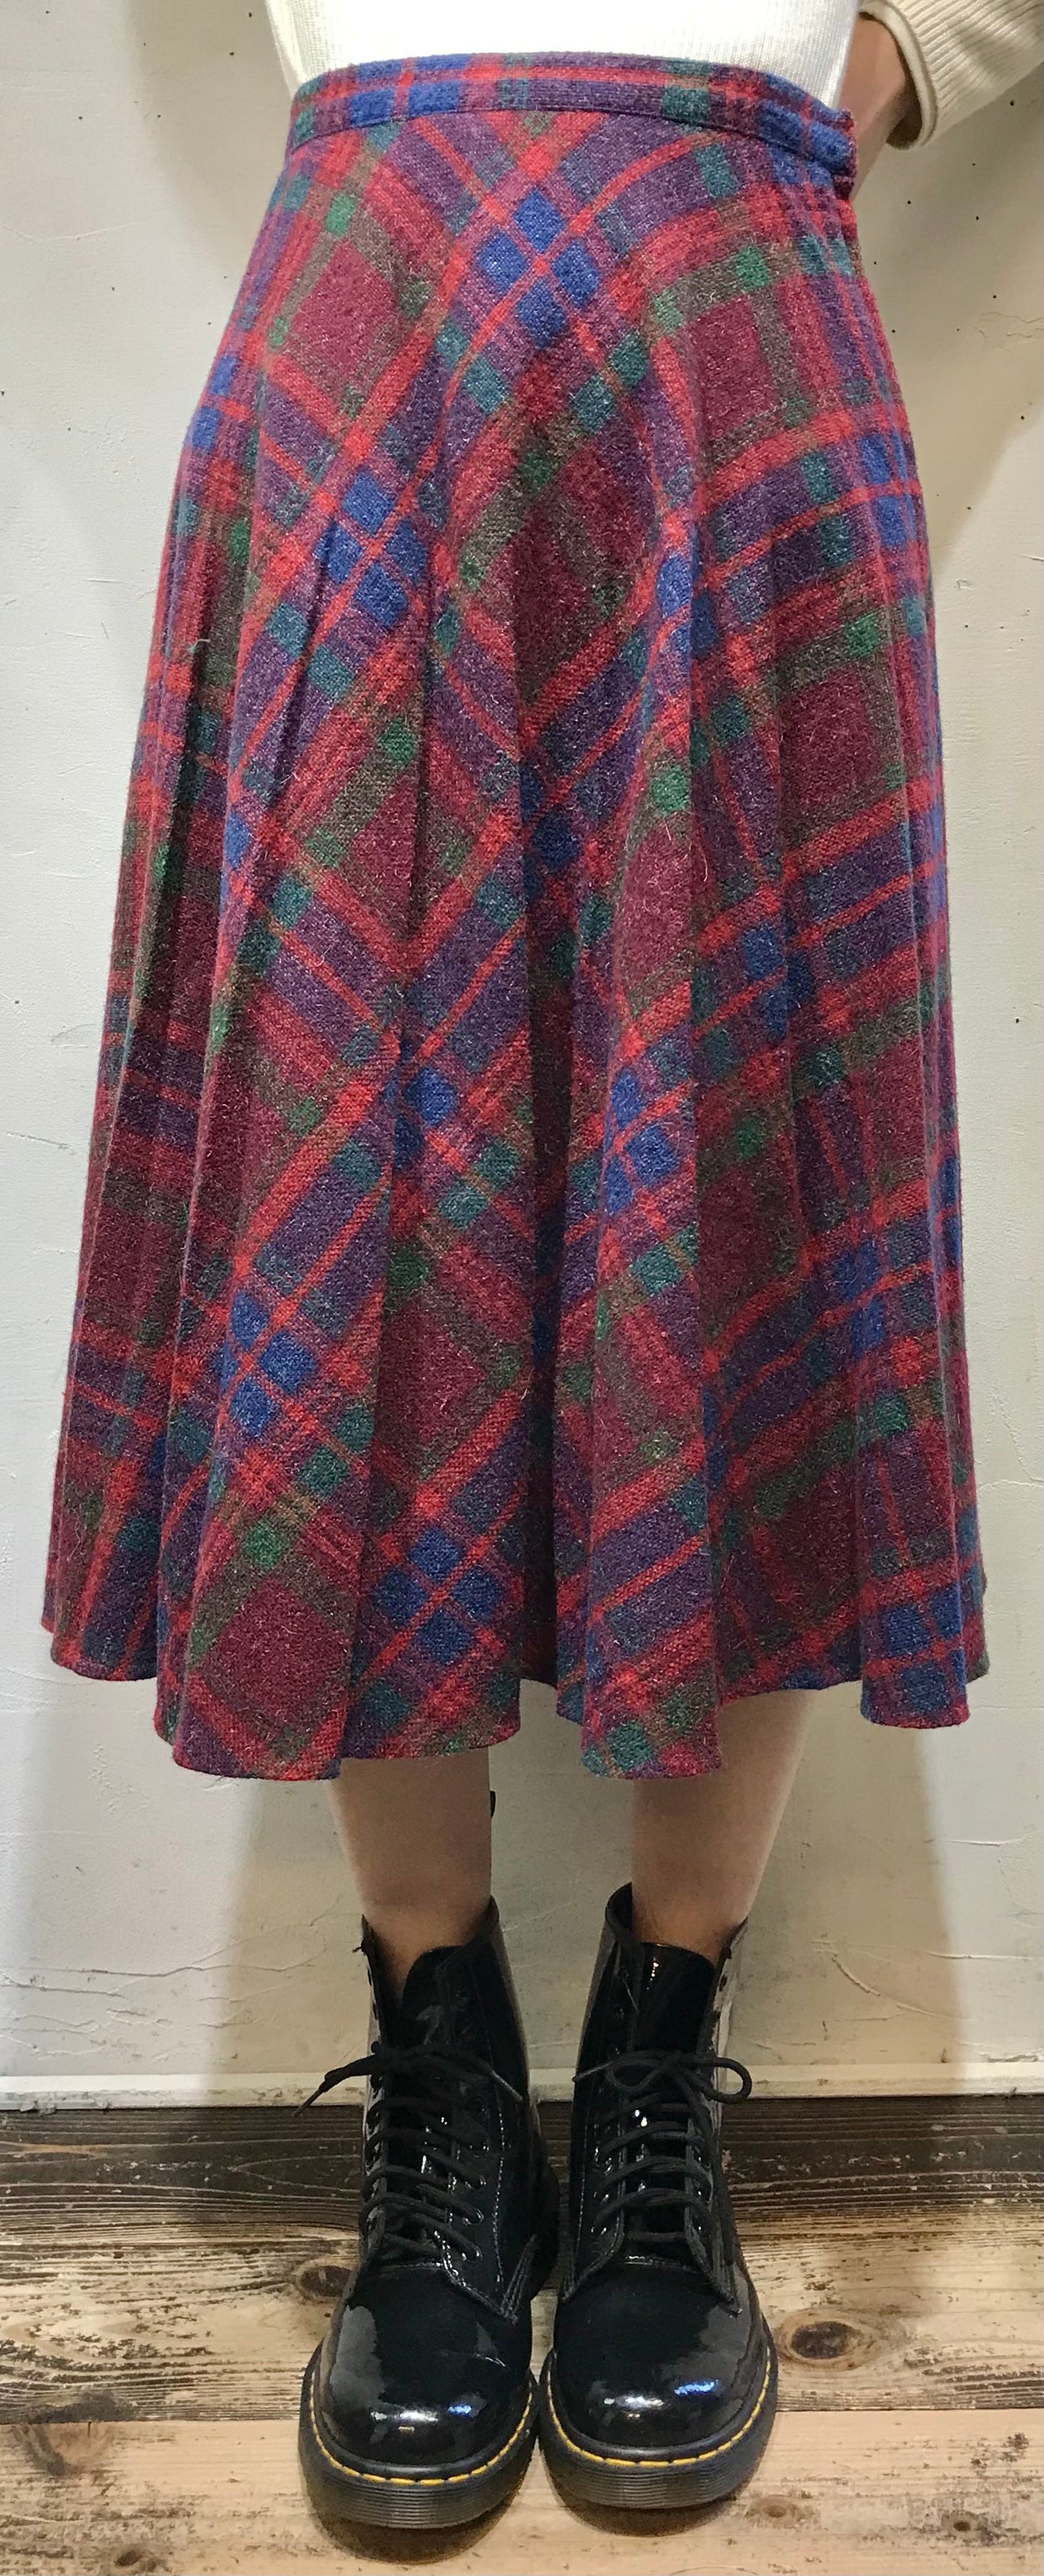 Vintage Plaid Skirt UNION MADE [A25934]